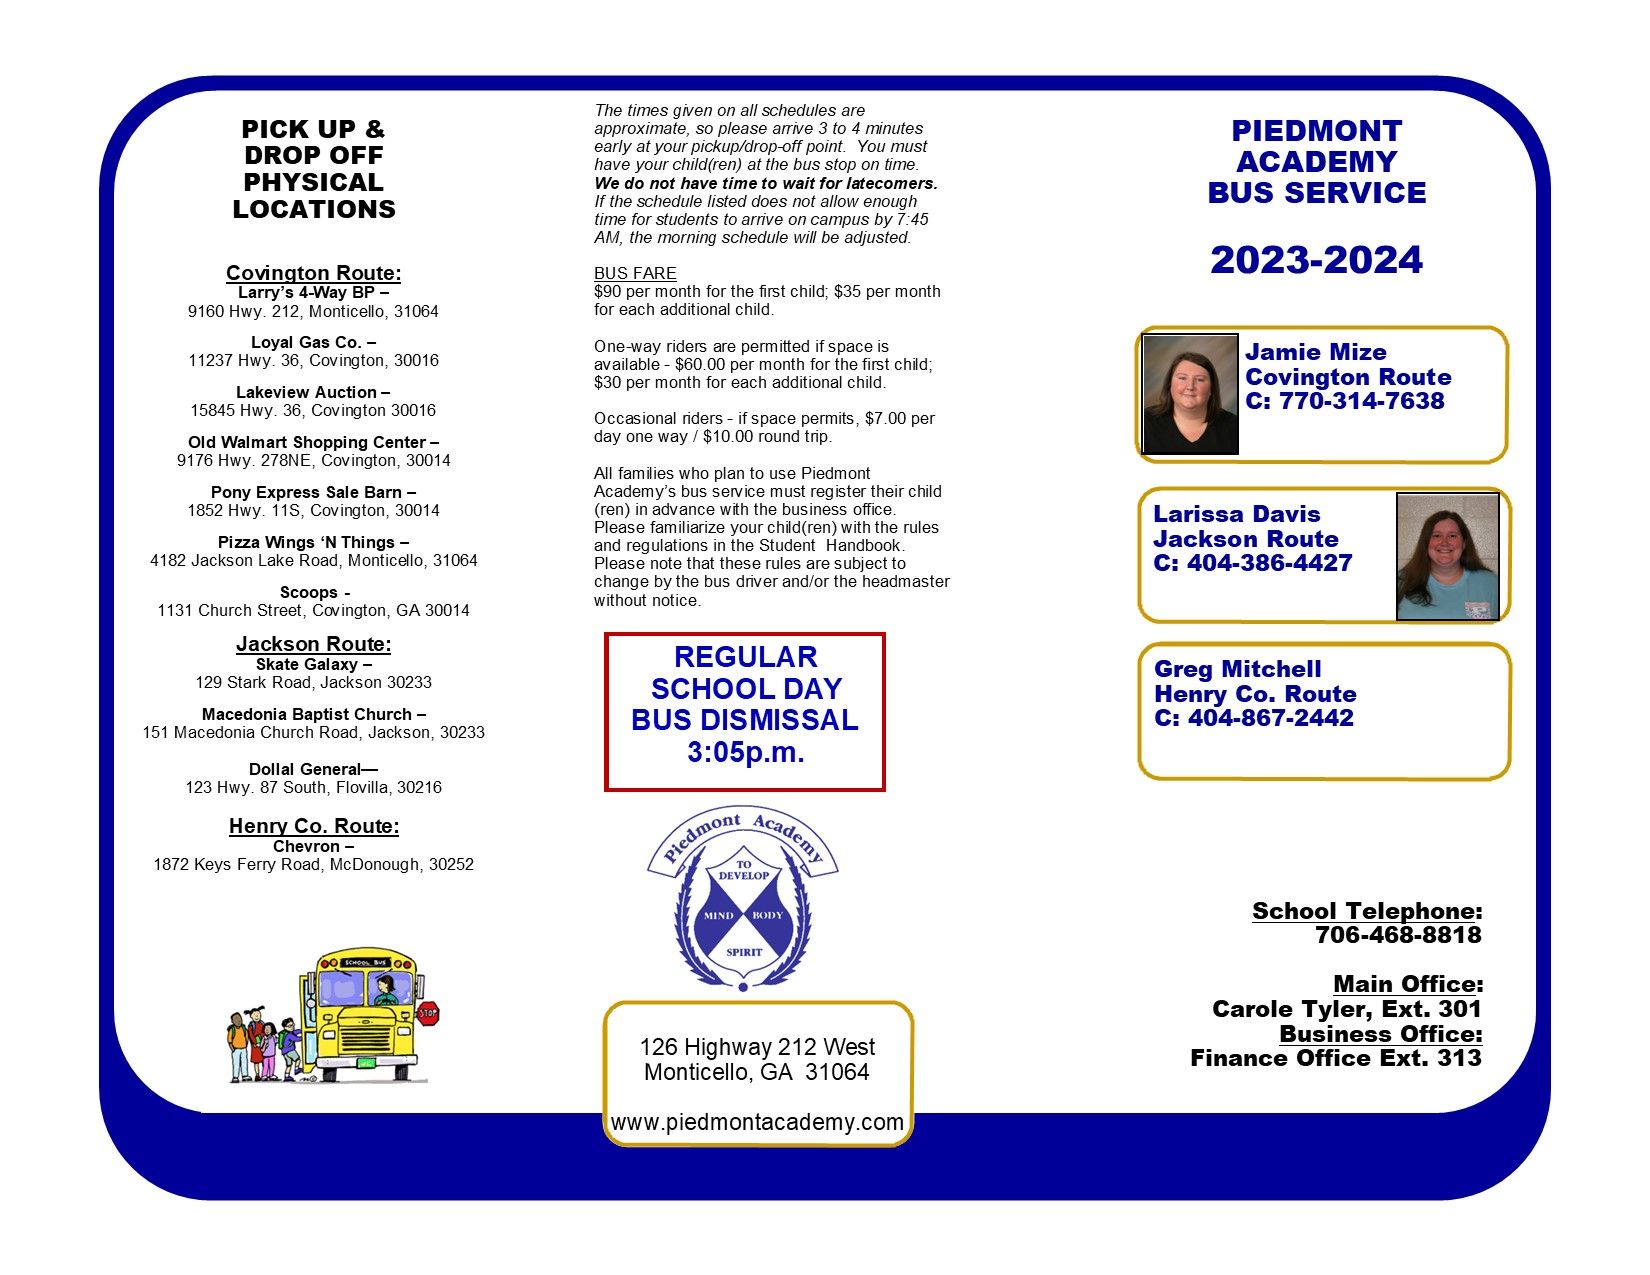 a brochure for the piedmont michigan school bus service